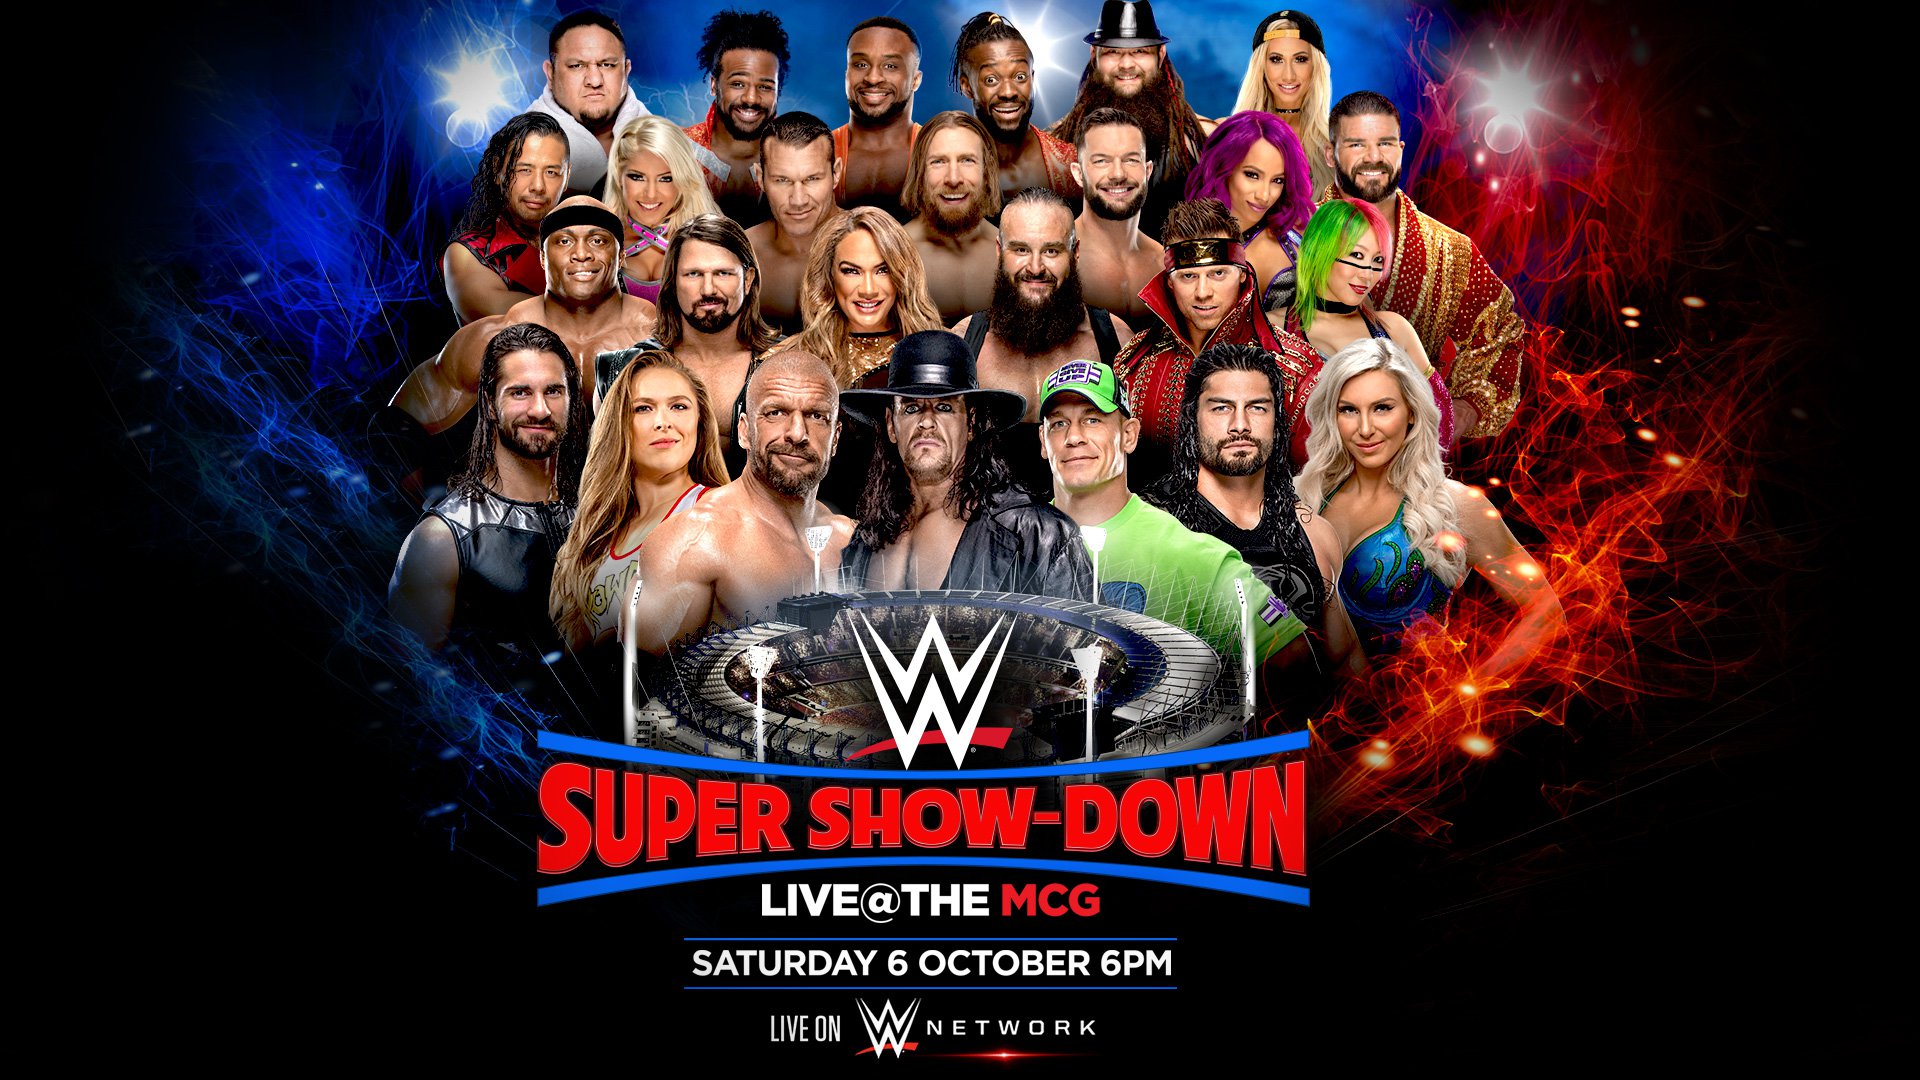 WWE Super ShowDown 2019 matches Rey Mysterio